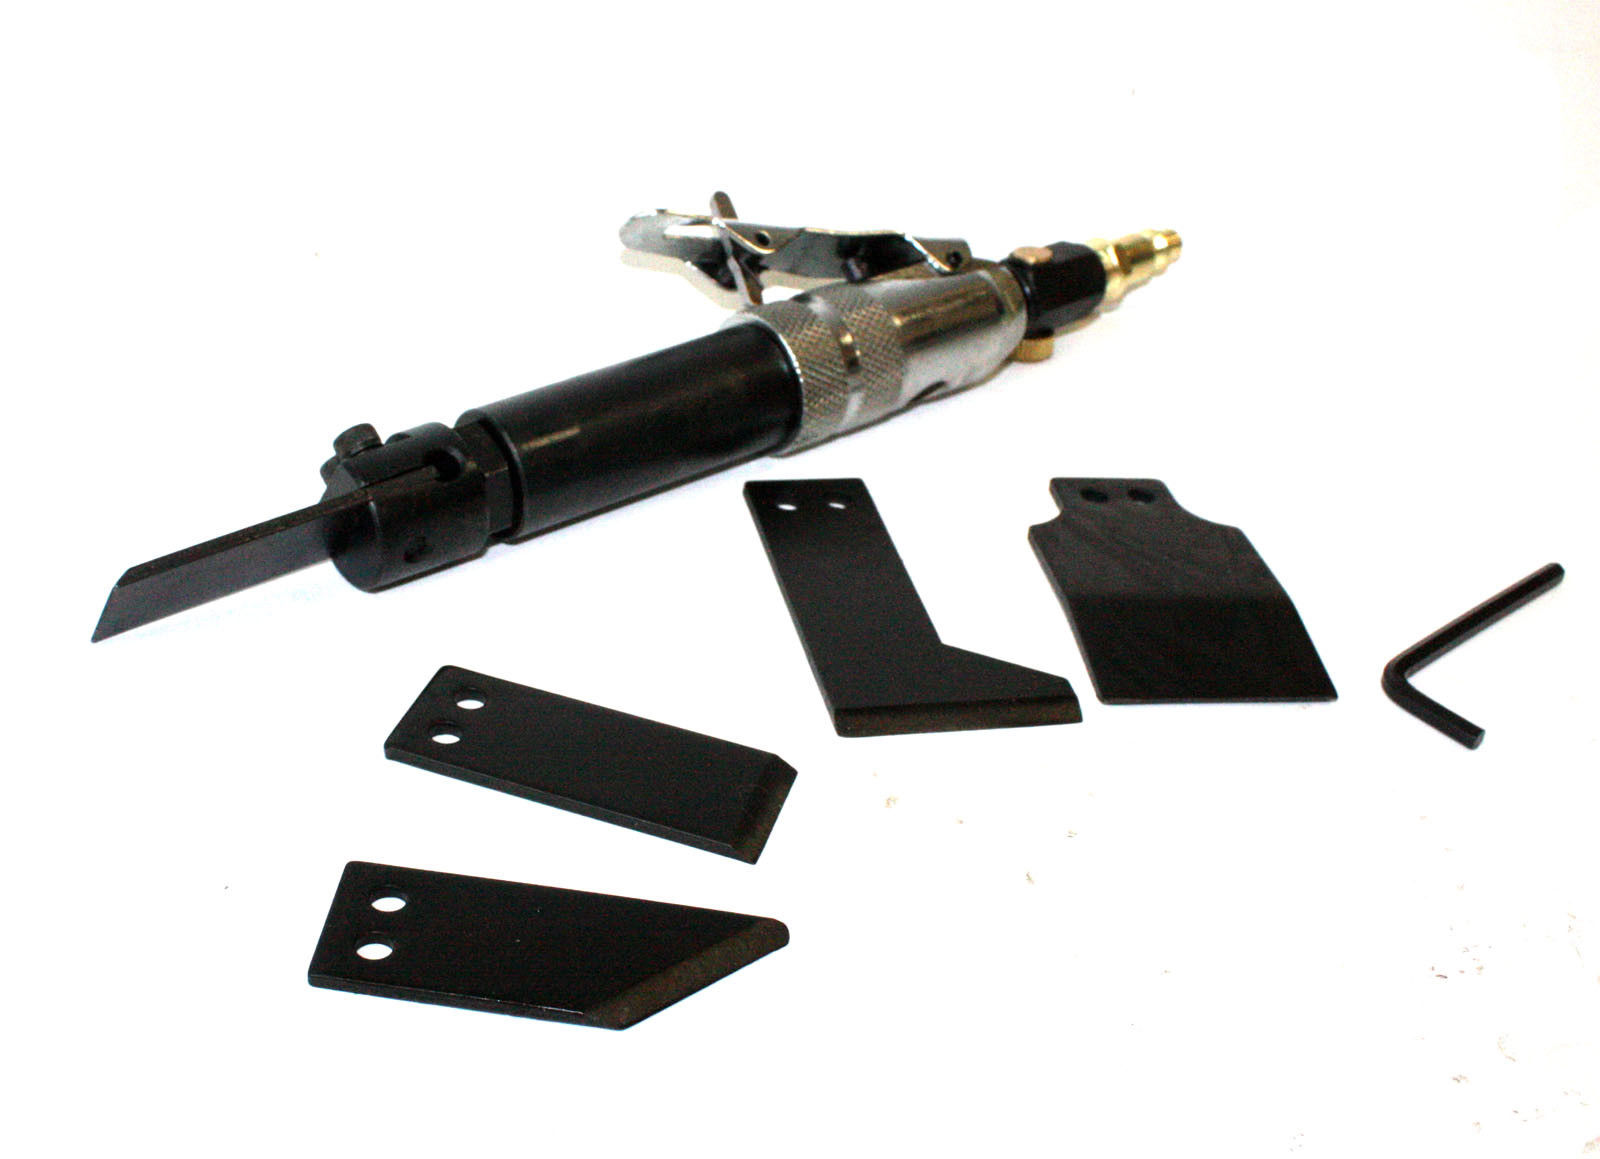 Details about   Pneumatic Air Powered Scraper Scraping Tool Kit Gasket Paint Rust Debris Remover 